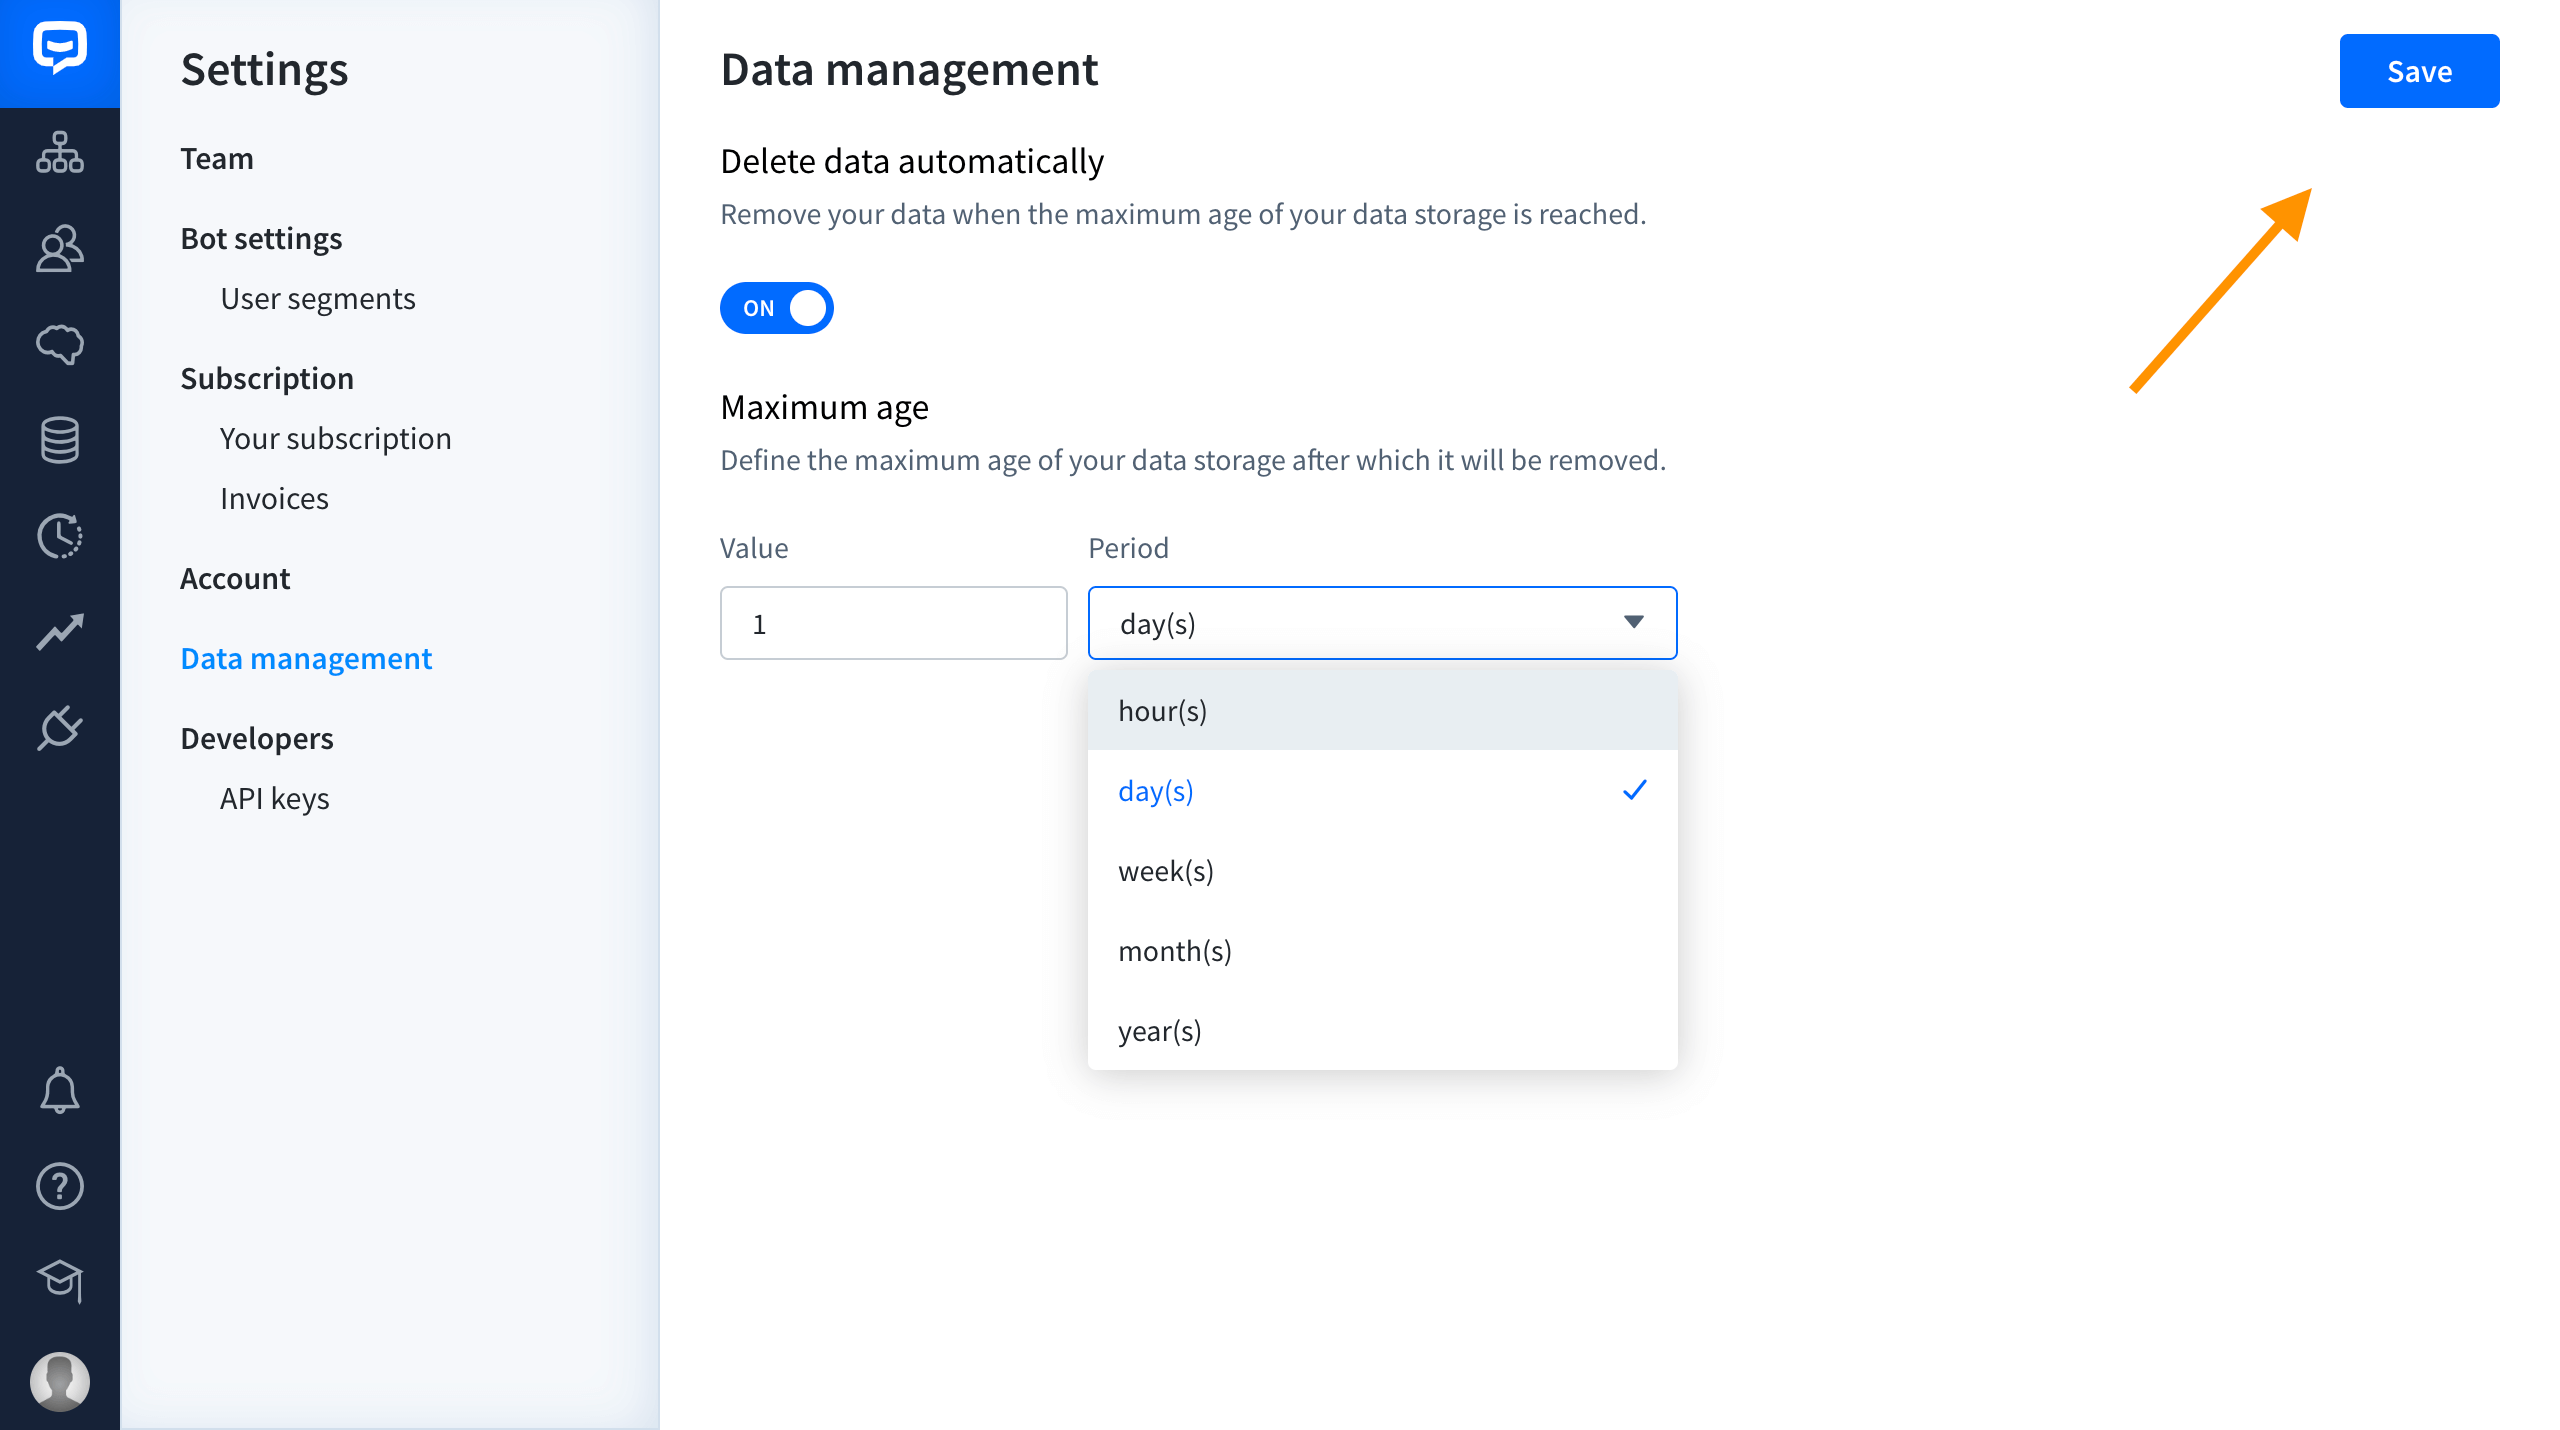 chatbot data management section